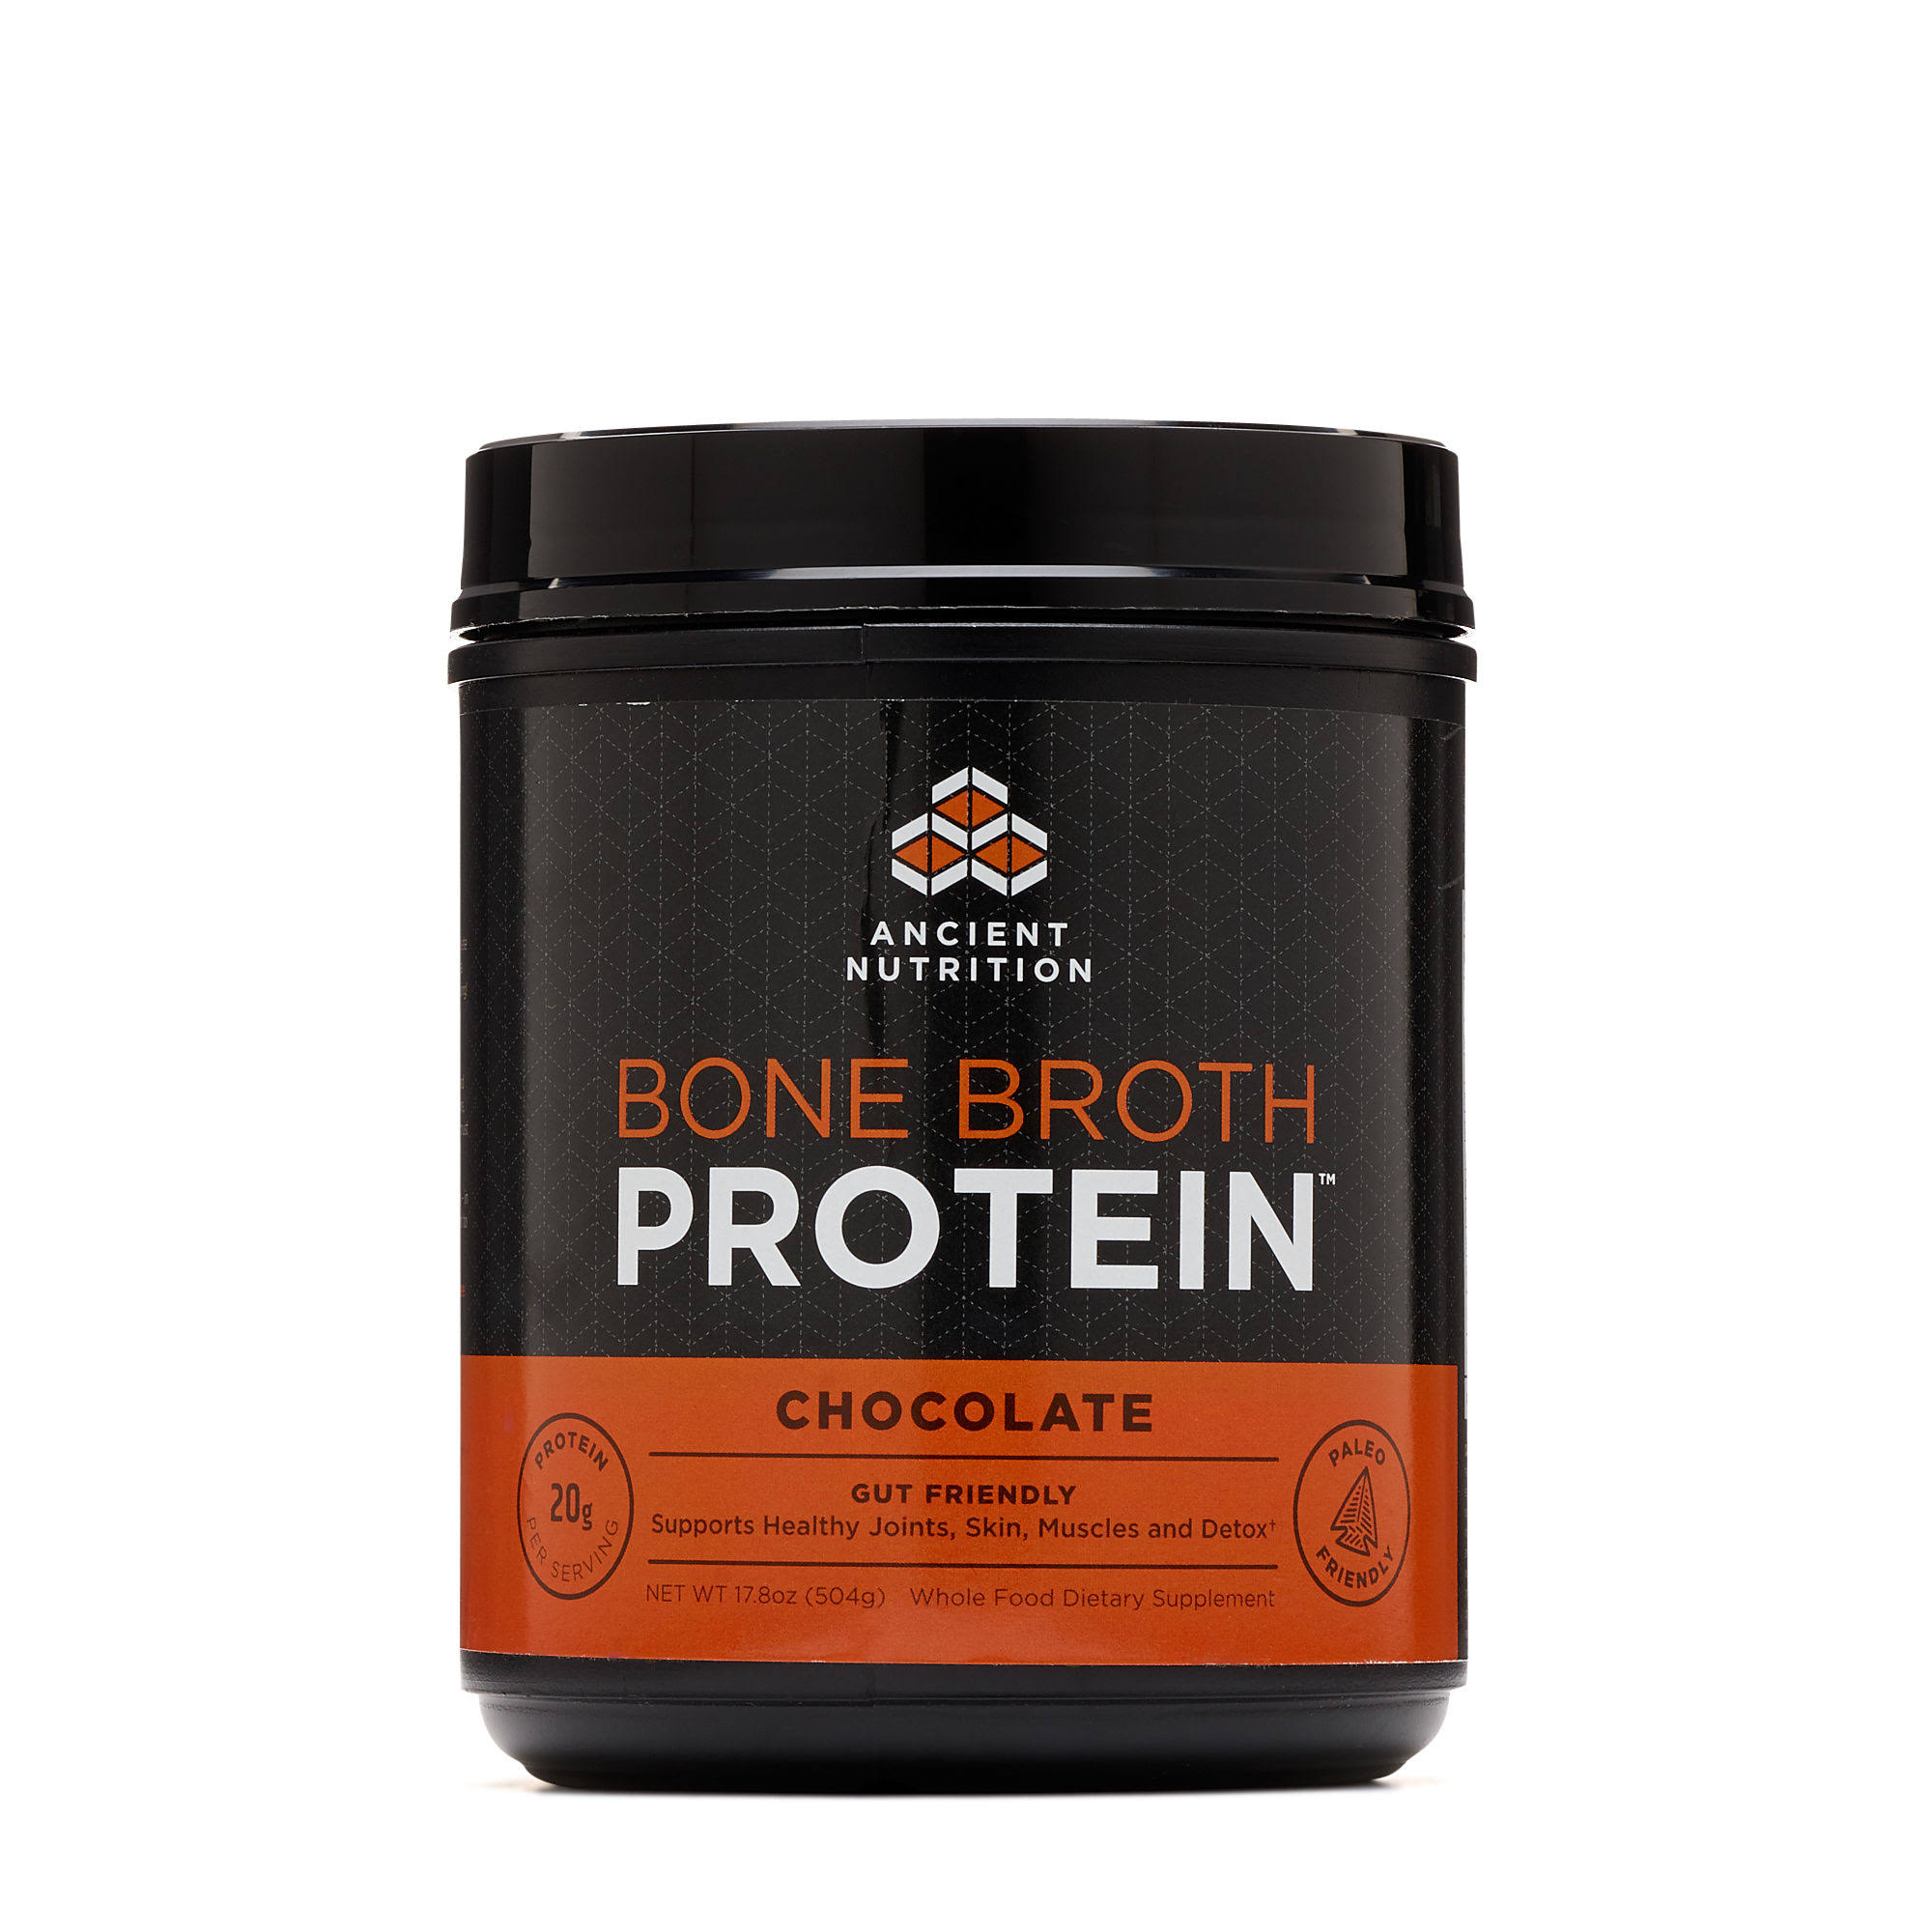 Ancient Nutrition Bone Broth Protein - Chocolate, 504g